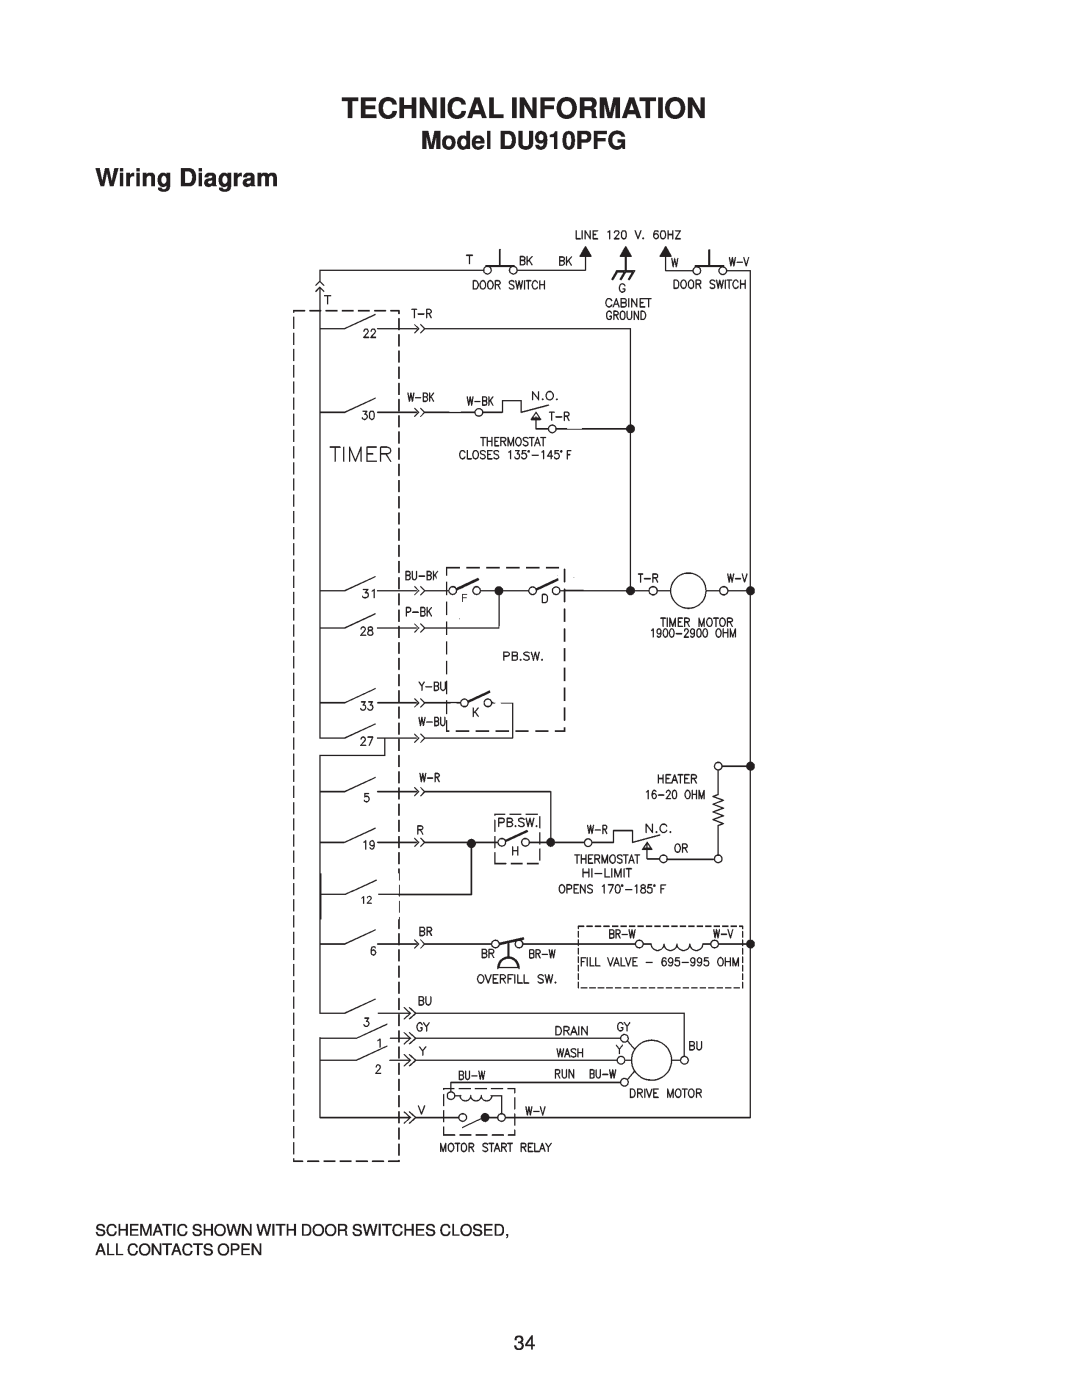 Kenmore DP840DWG, DU890DWG, DU920PFG, GU960SCG, DU850DWG, DU805DWG manual Model DU910PFG Wiring Diagram, Technical Information 